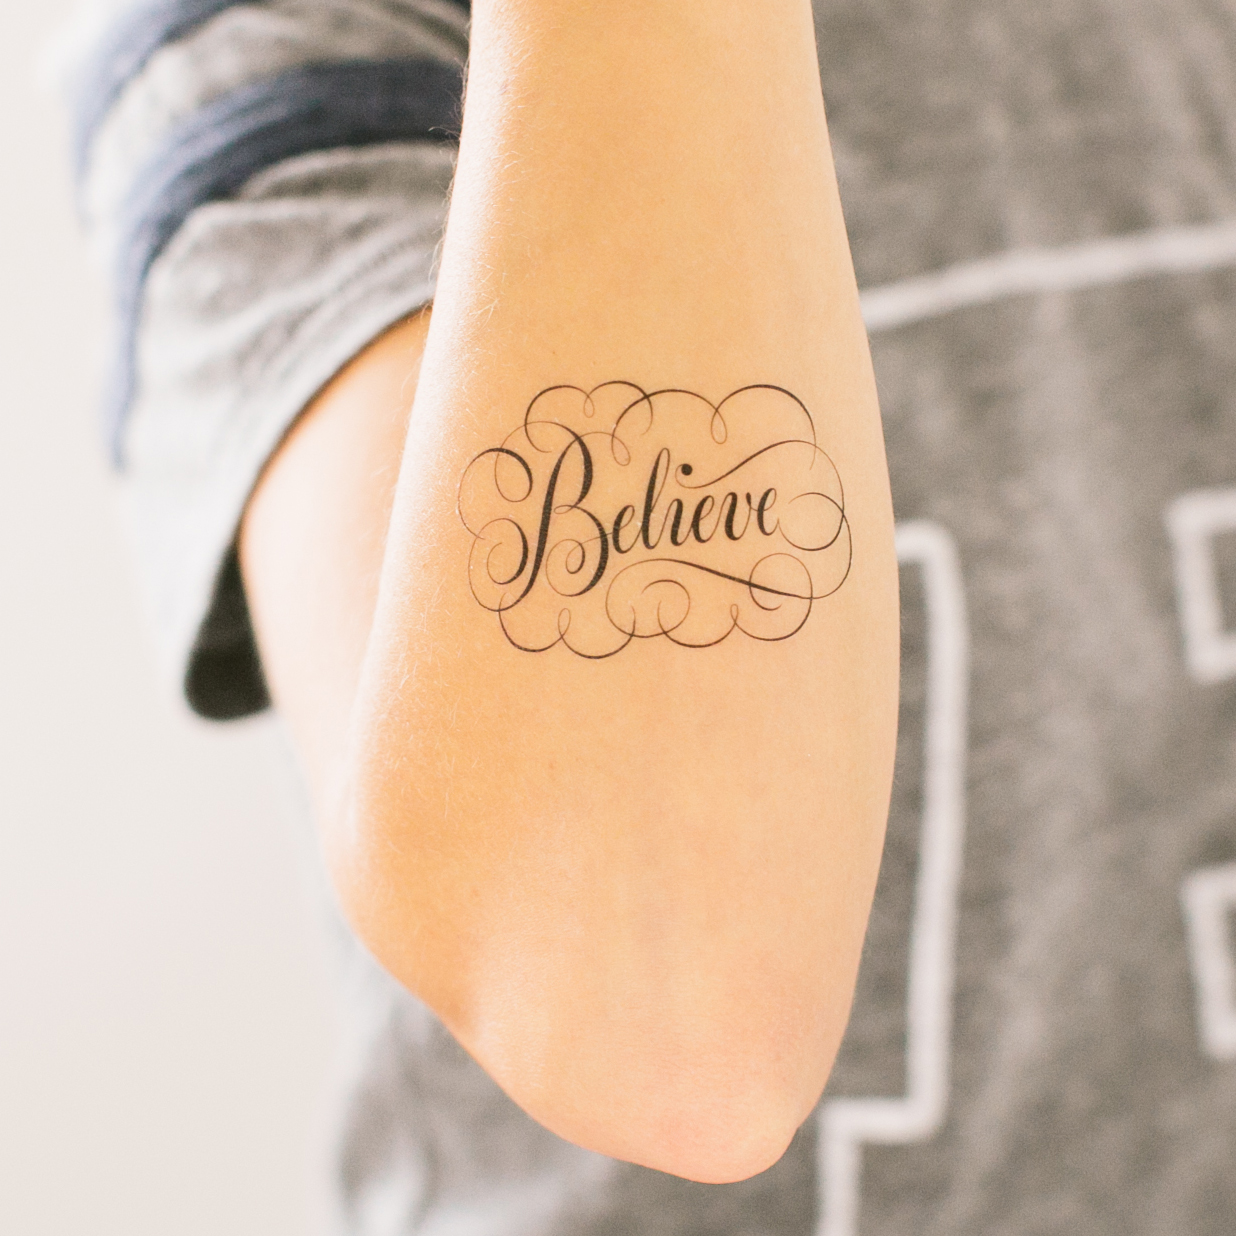 Believe with infinity | Believe tattoos, Inspirational tattoos, Infinity  tattoo